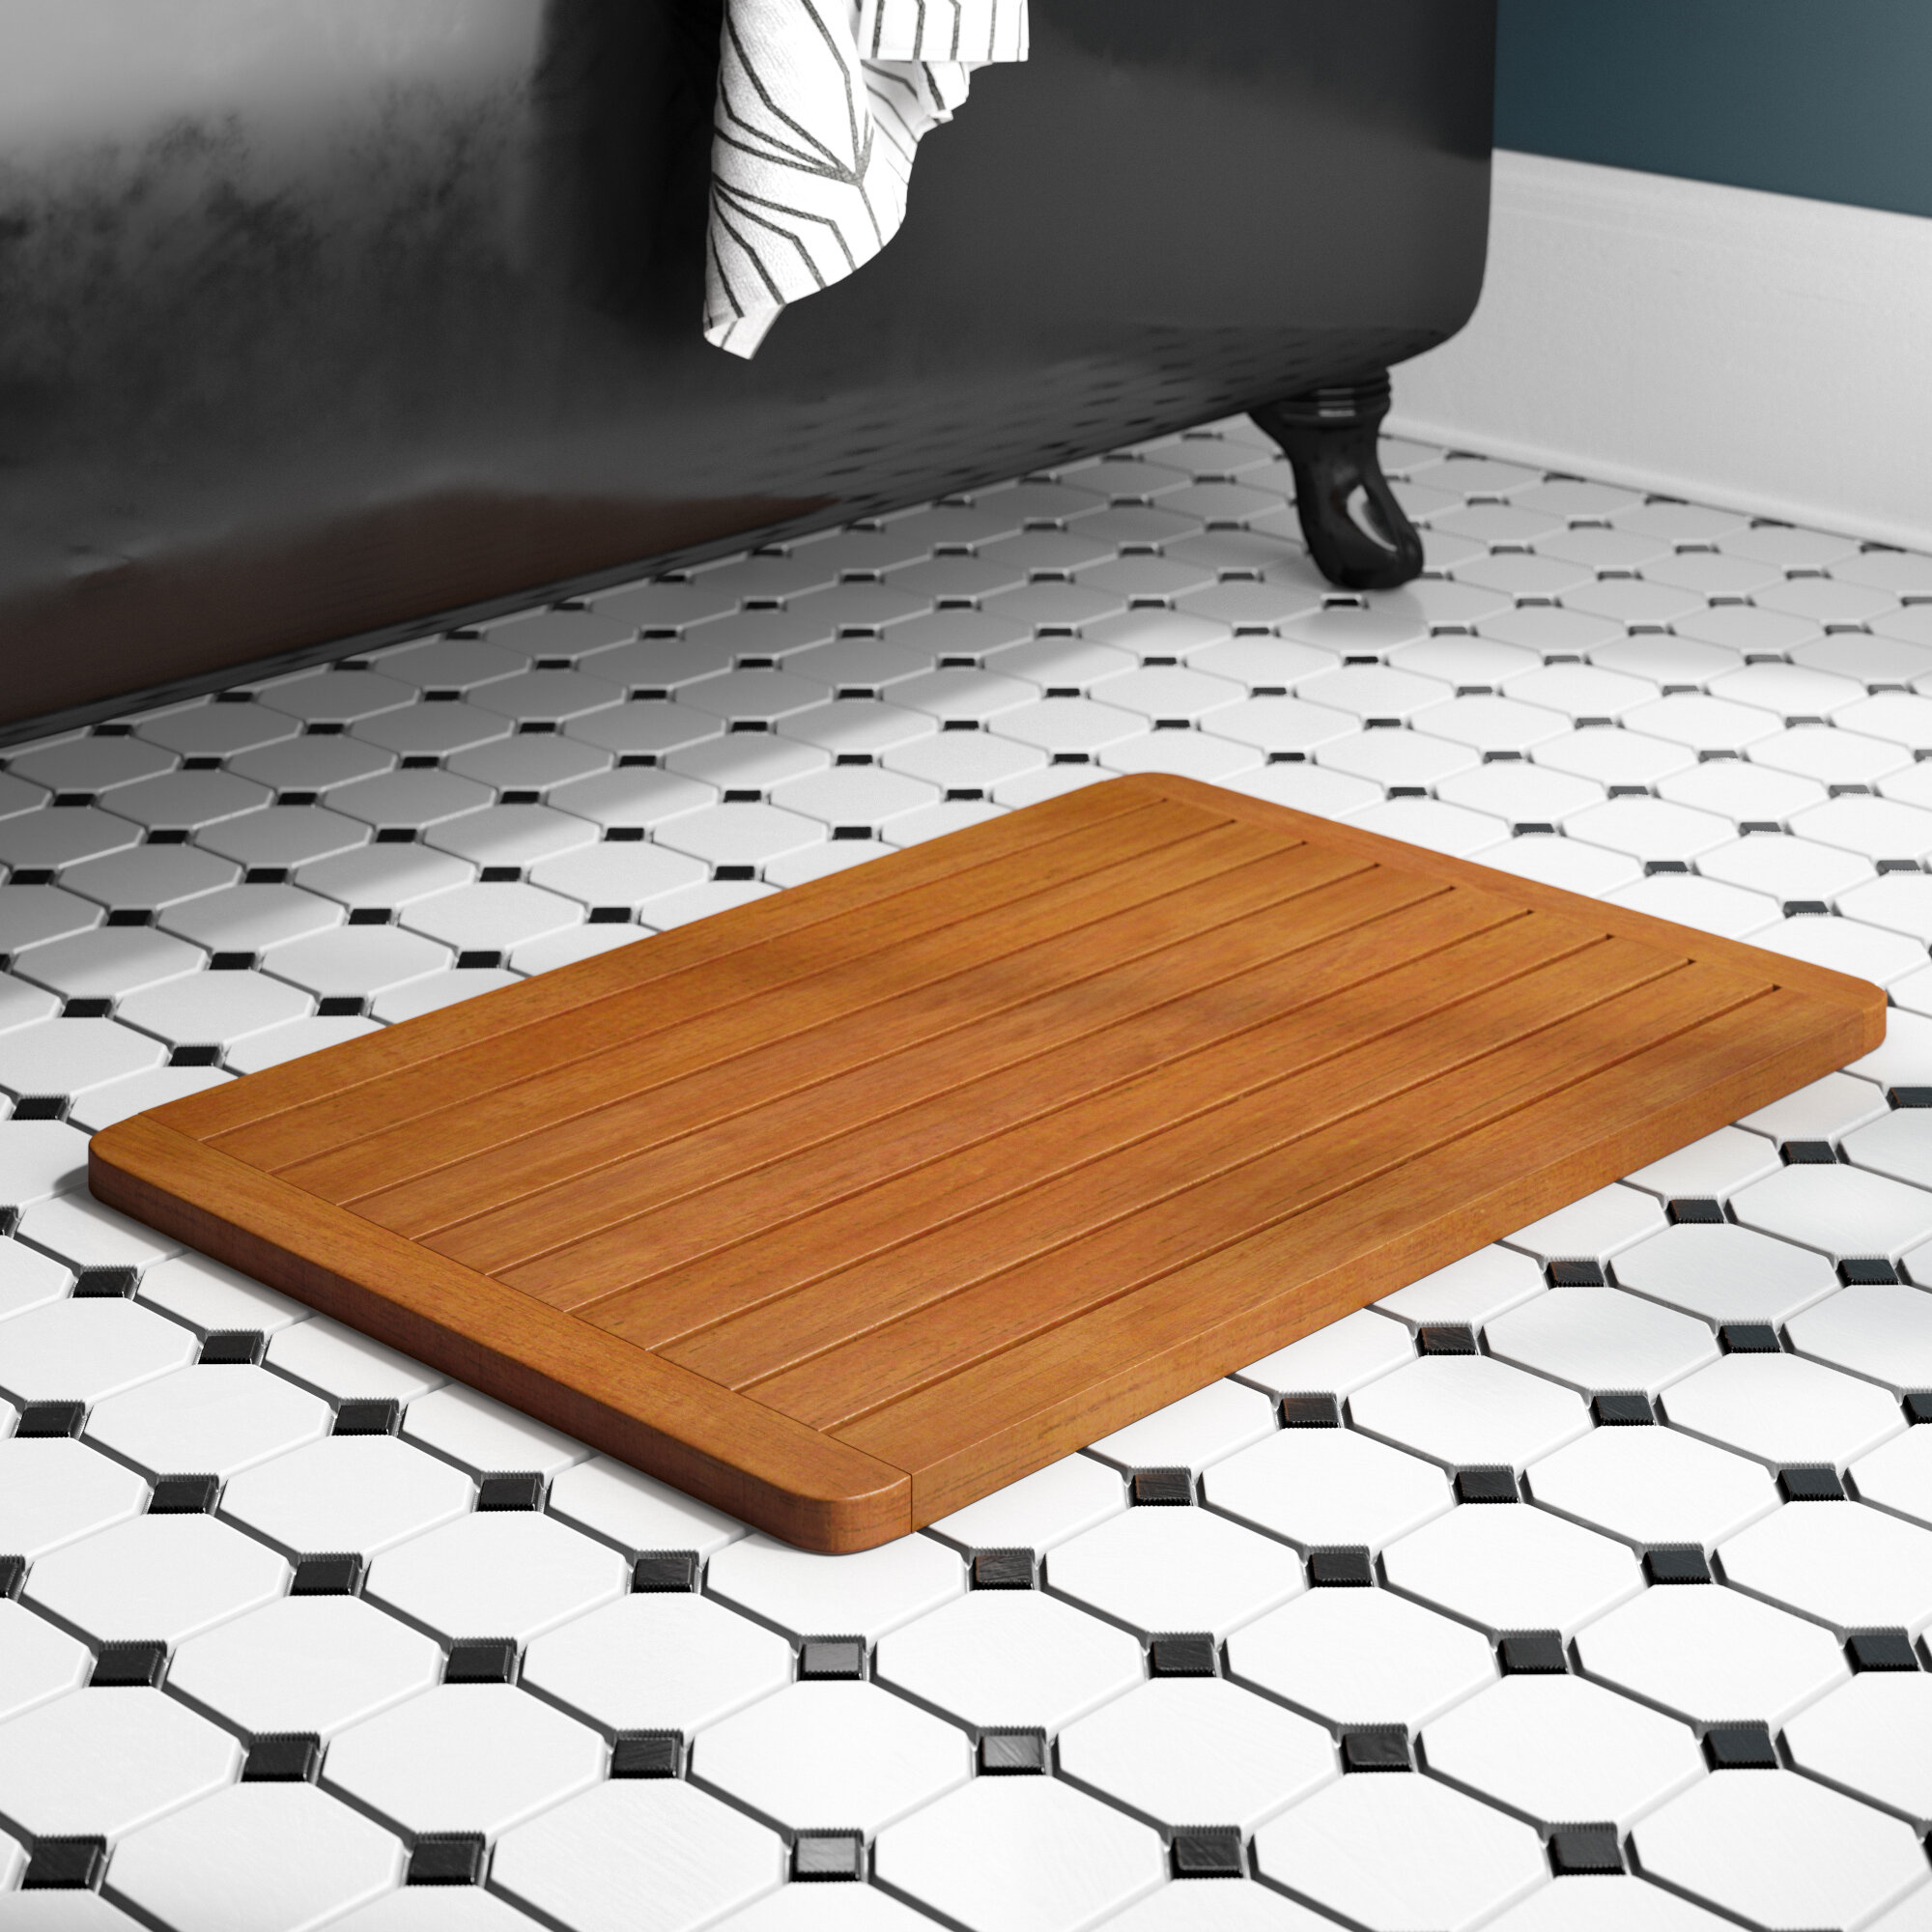 001 Bathroom Wood Strip Floor Doormat Bath Wood Non-slip Mold